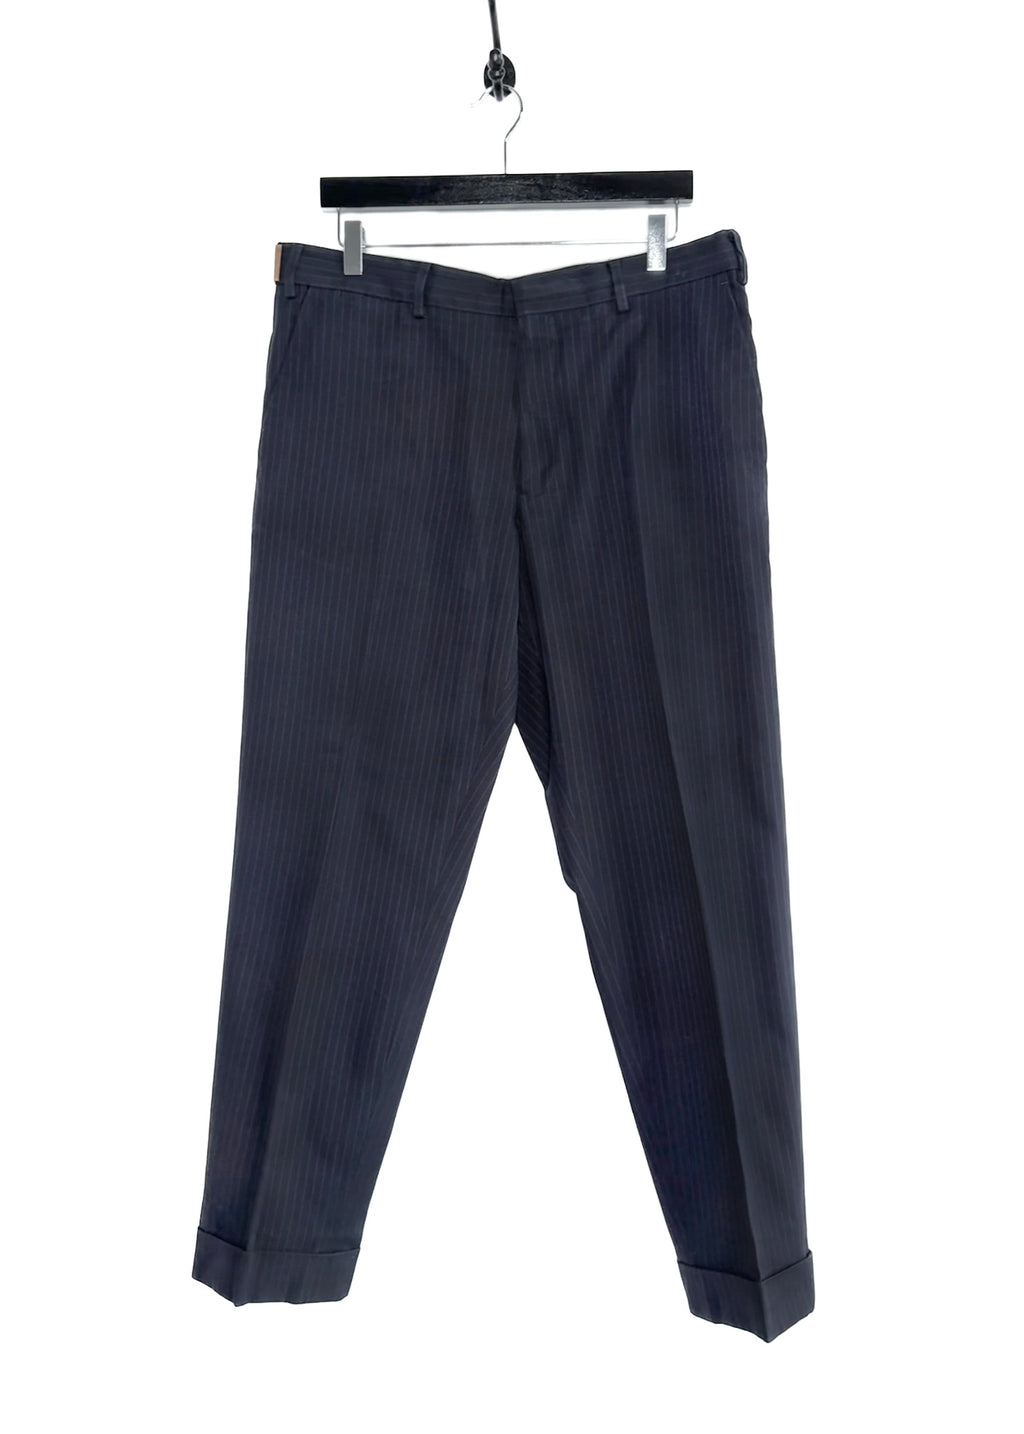 Dries Van Noten Pinstripe Navy Blue Pants